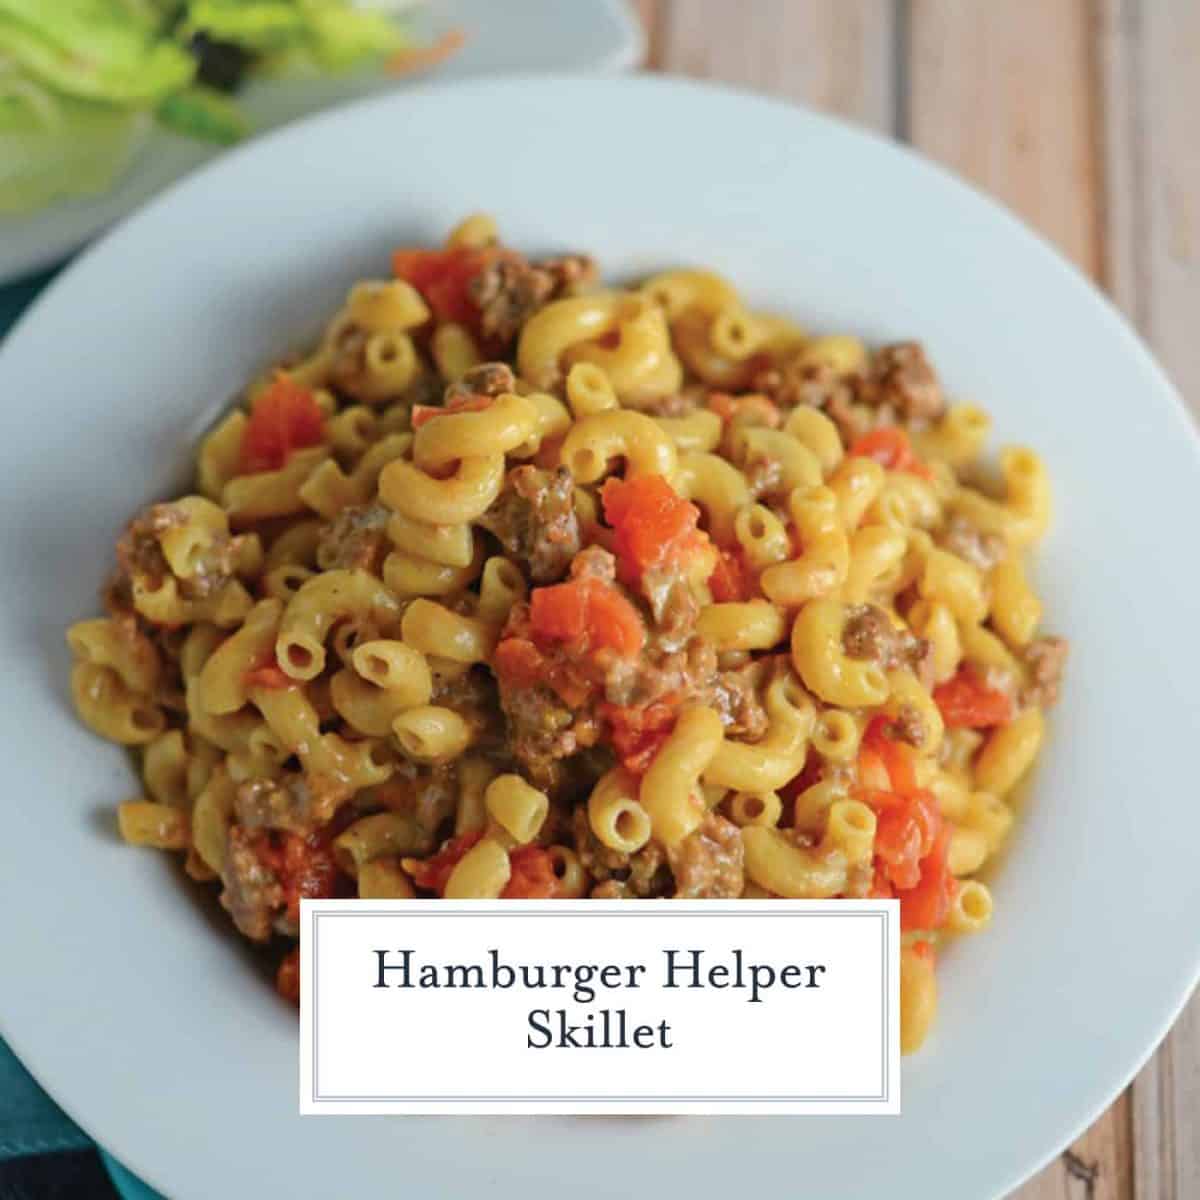 Hamburger Helper Skillet - A Cheesy One-Dish Meal